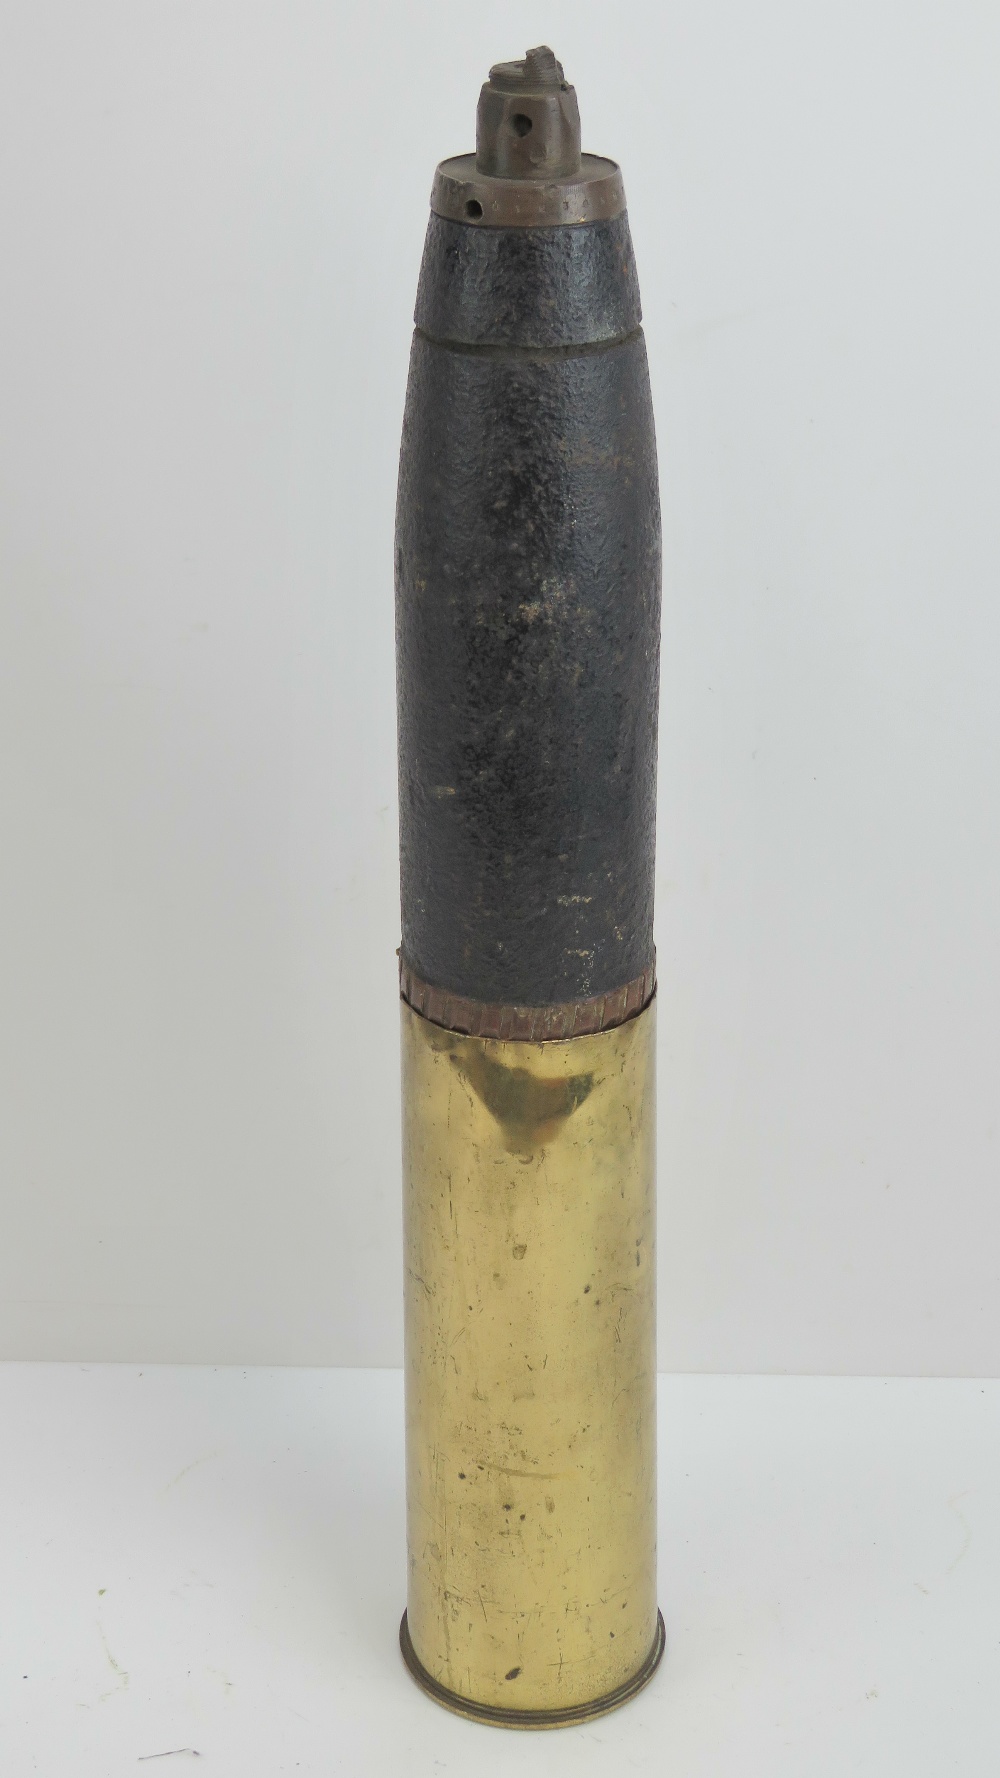 A Royal Artillery 25lb shell in case, 61cm tall.